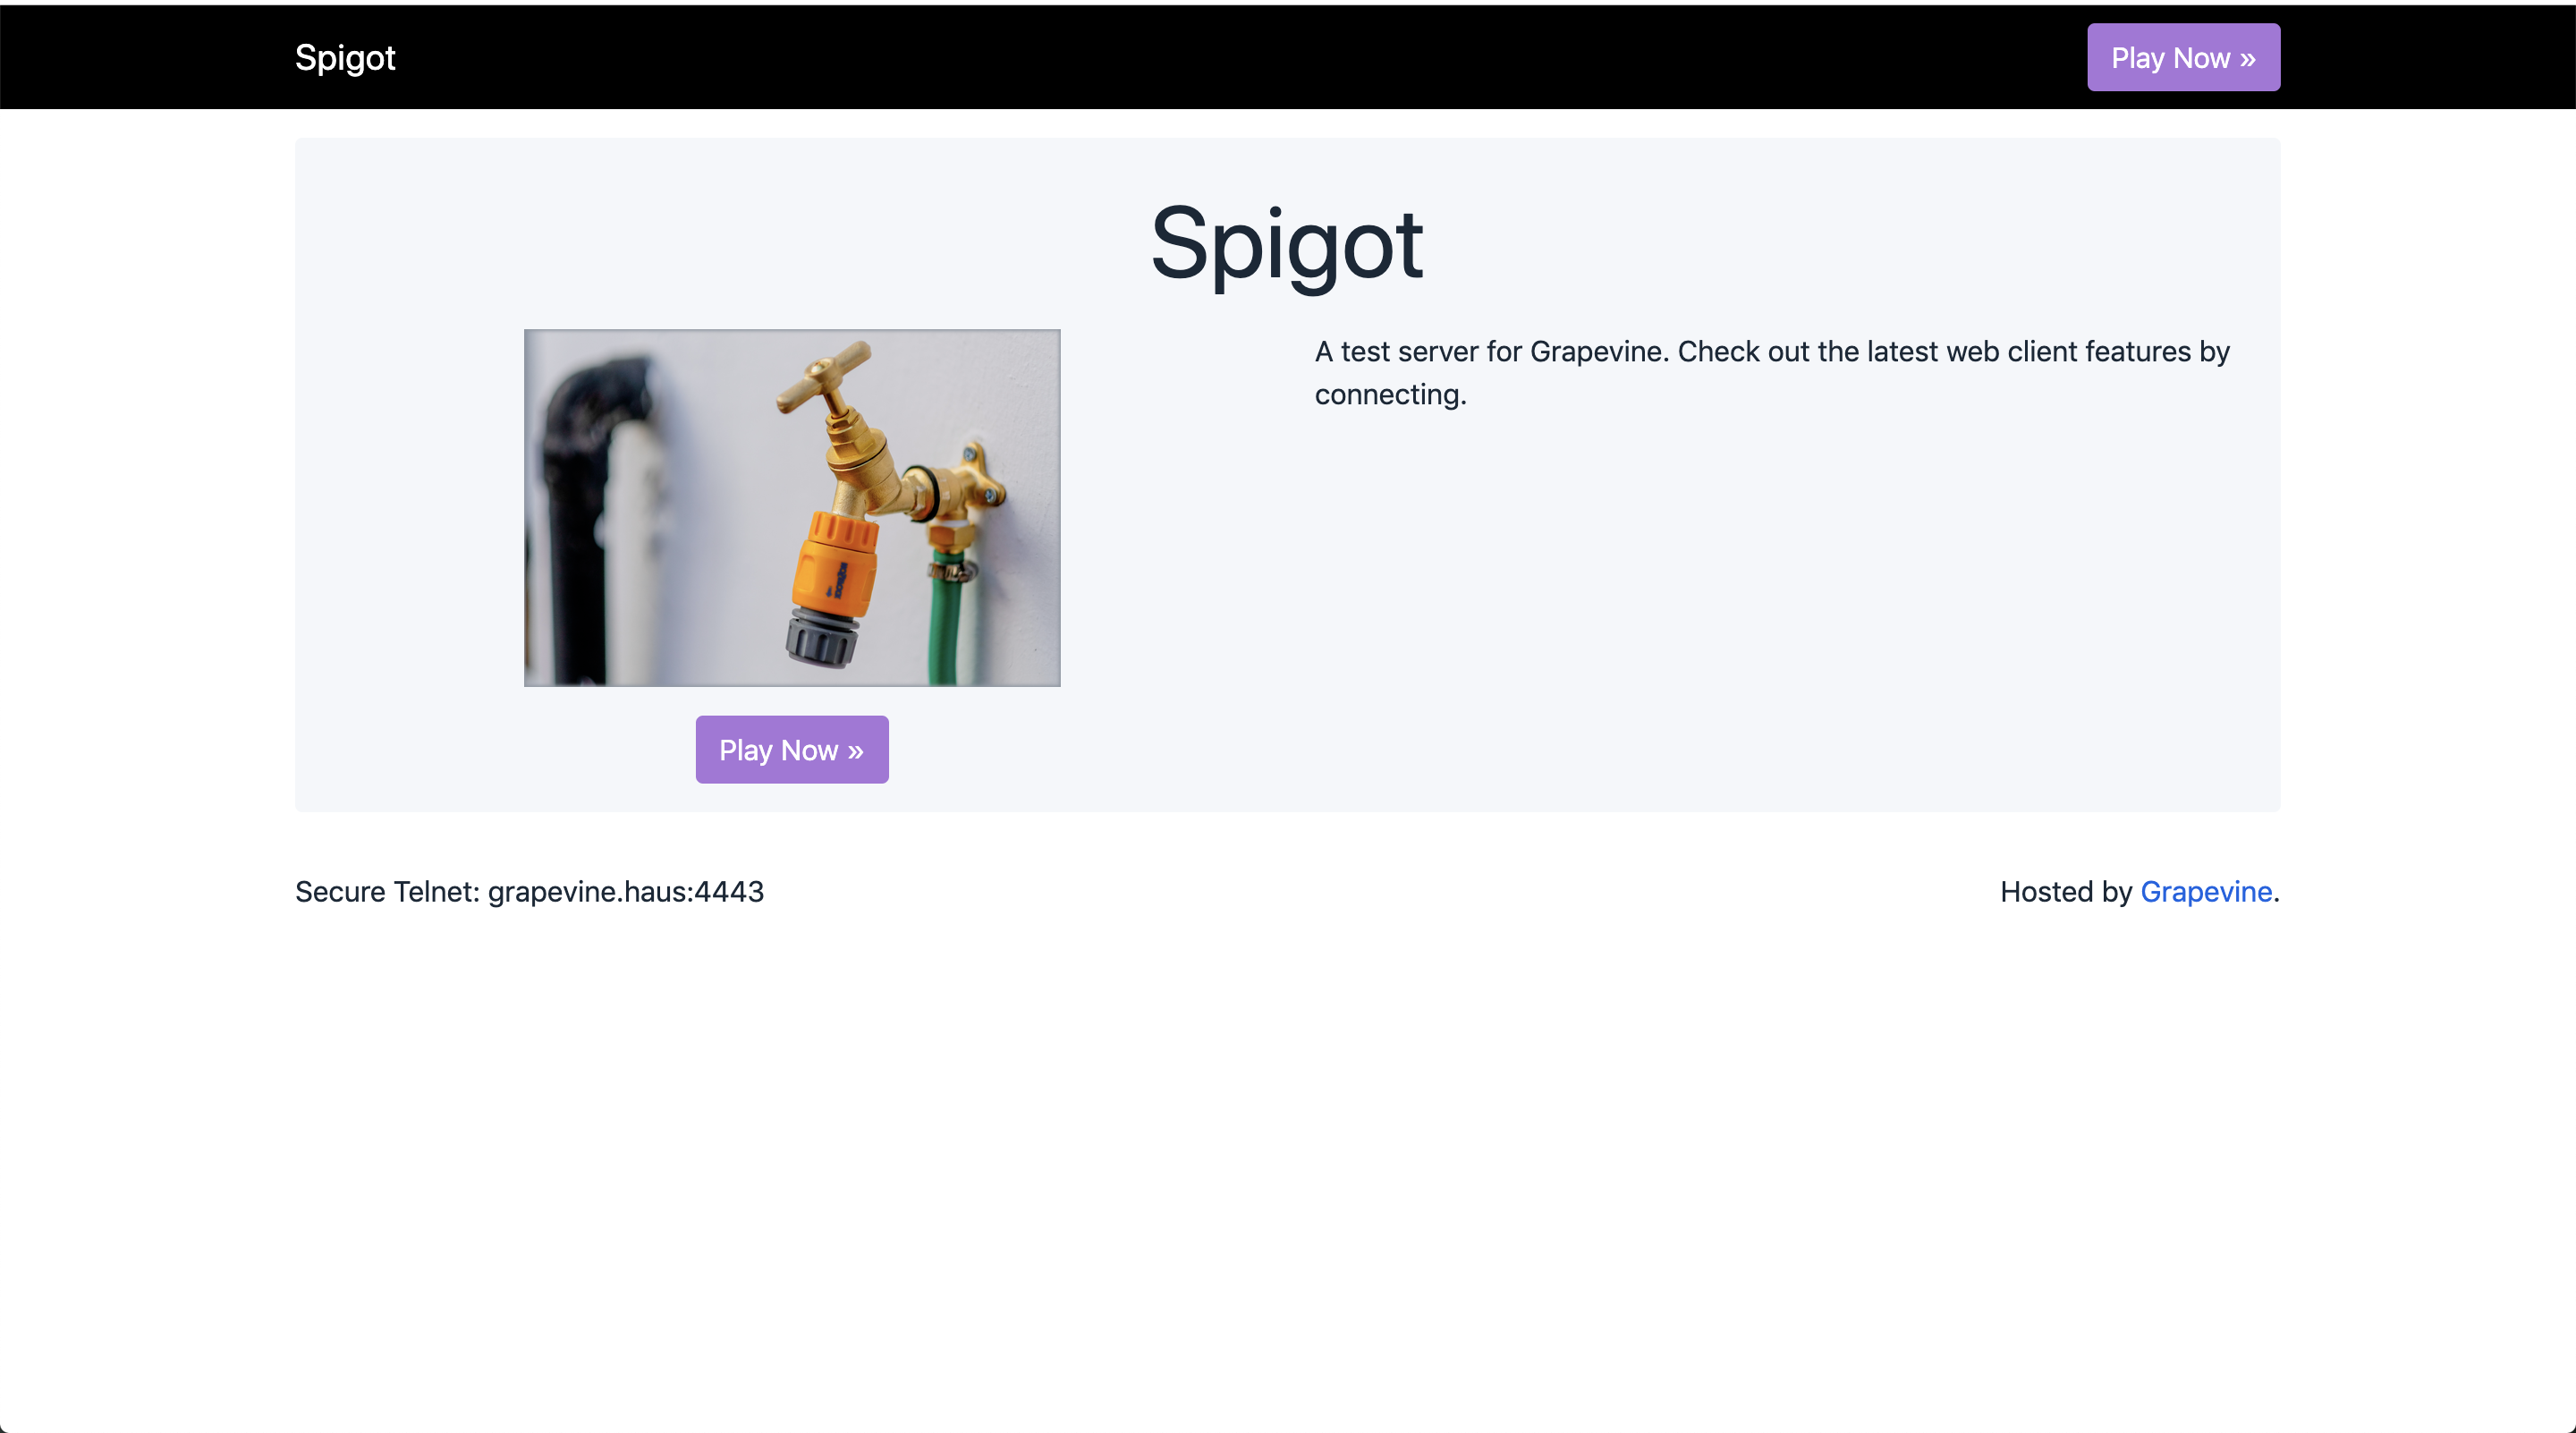 Spigot's hosted site